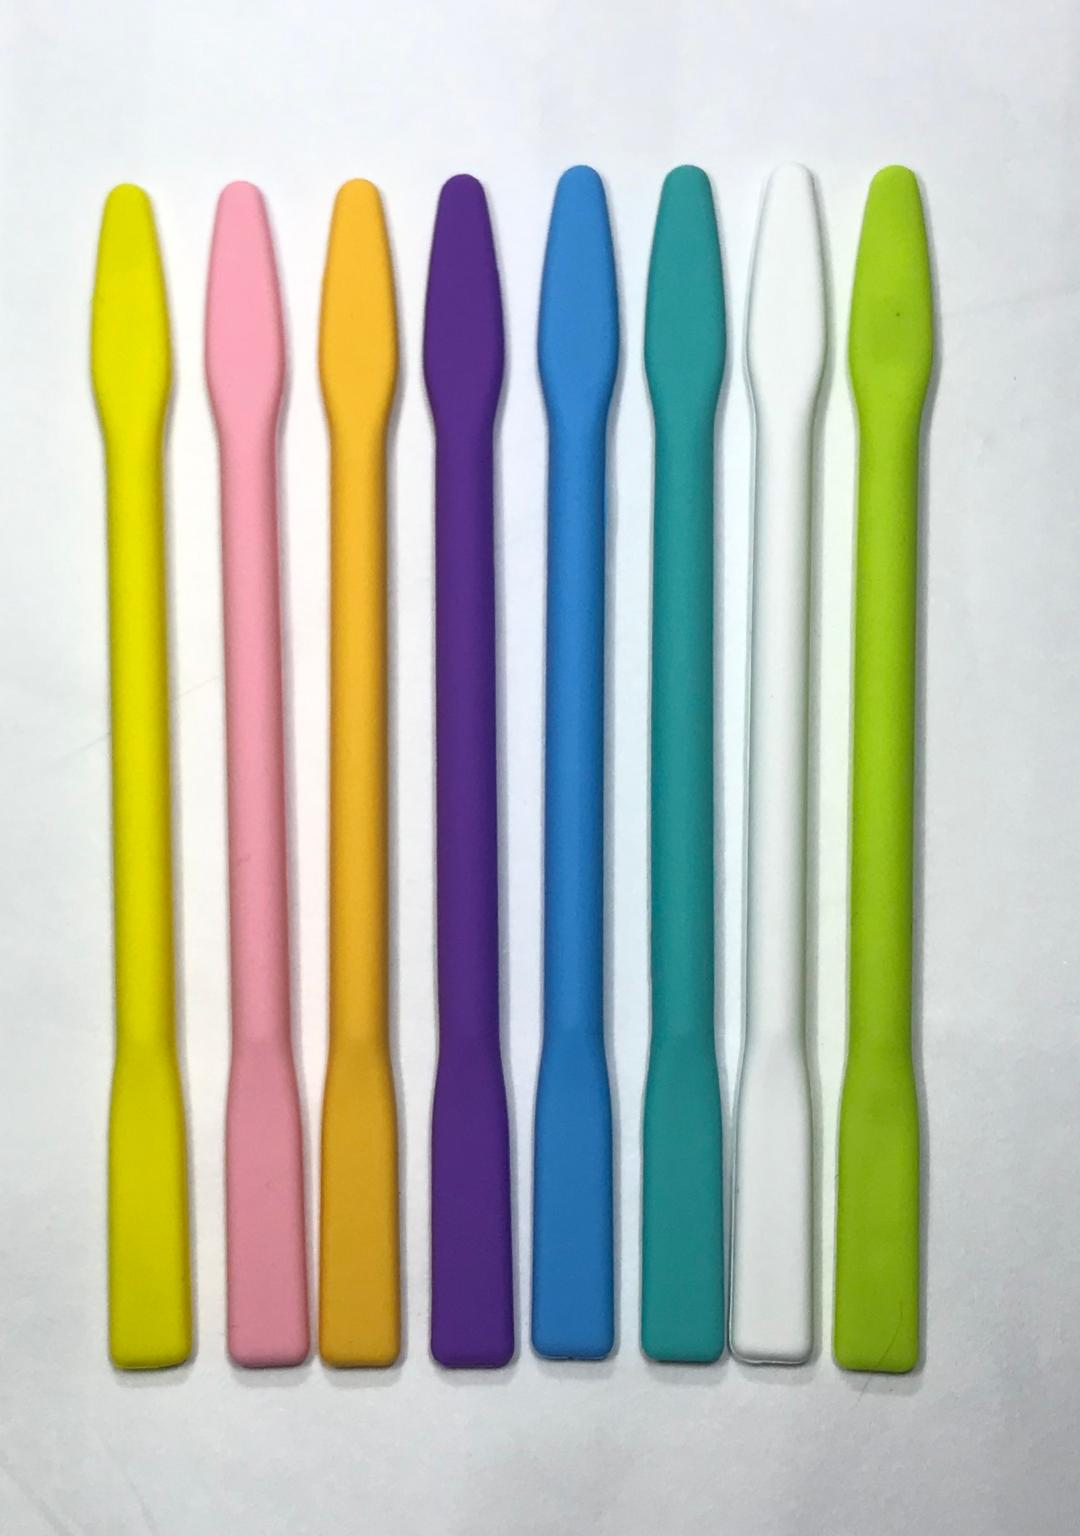 10 Pieces Silicone Stir Sticks - GDJJ028 - IdeaStage Promotional Products